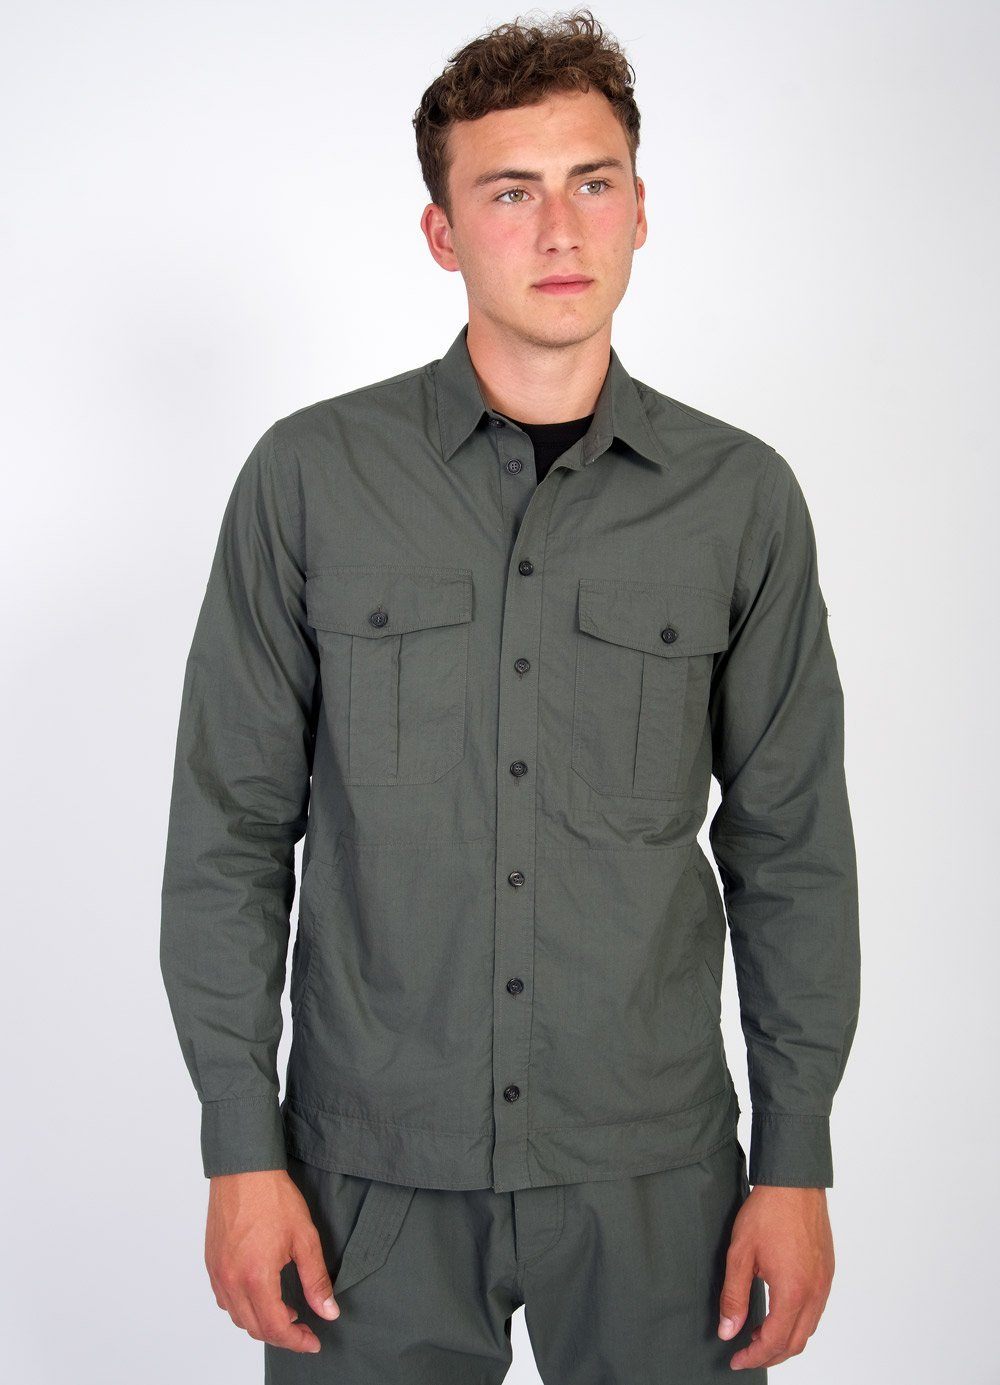 Us Army Rangers Sleeve Shirt Casual T-Shirt Button  